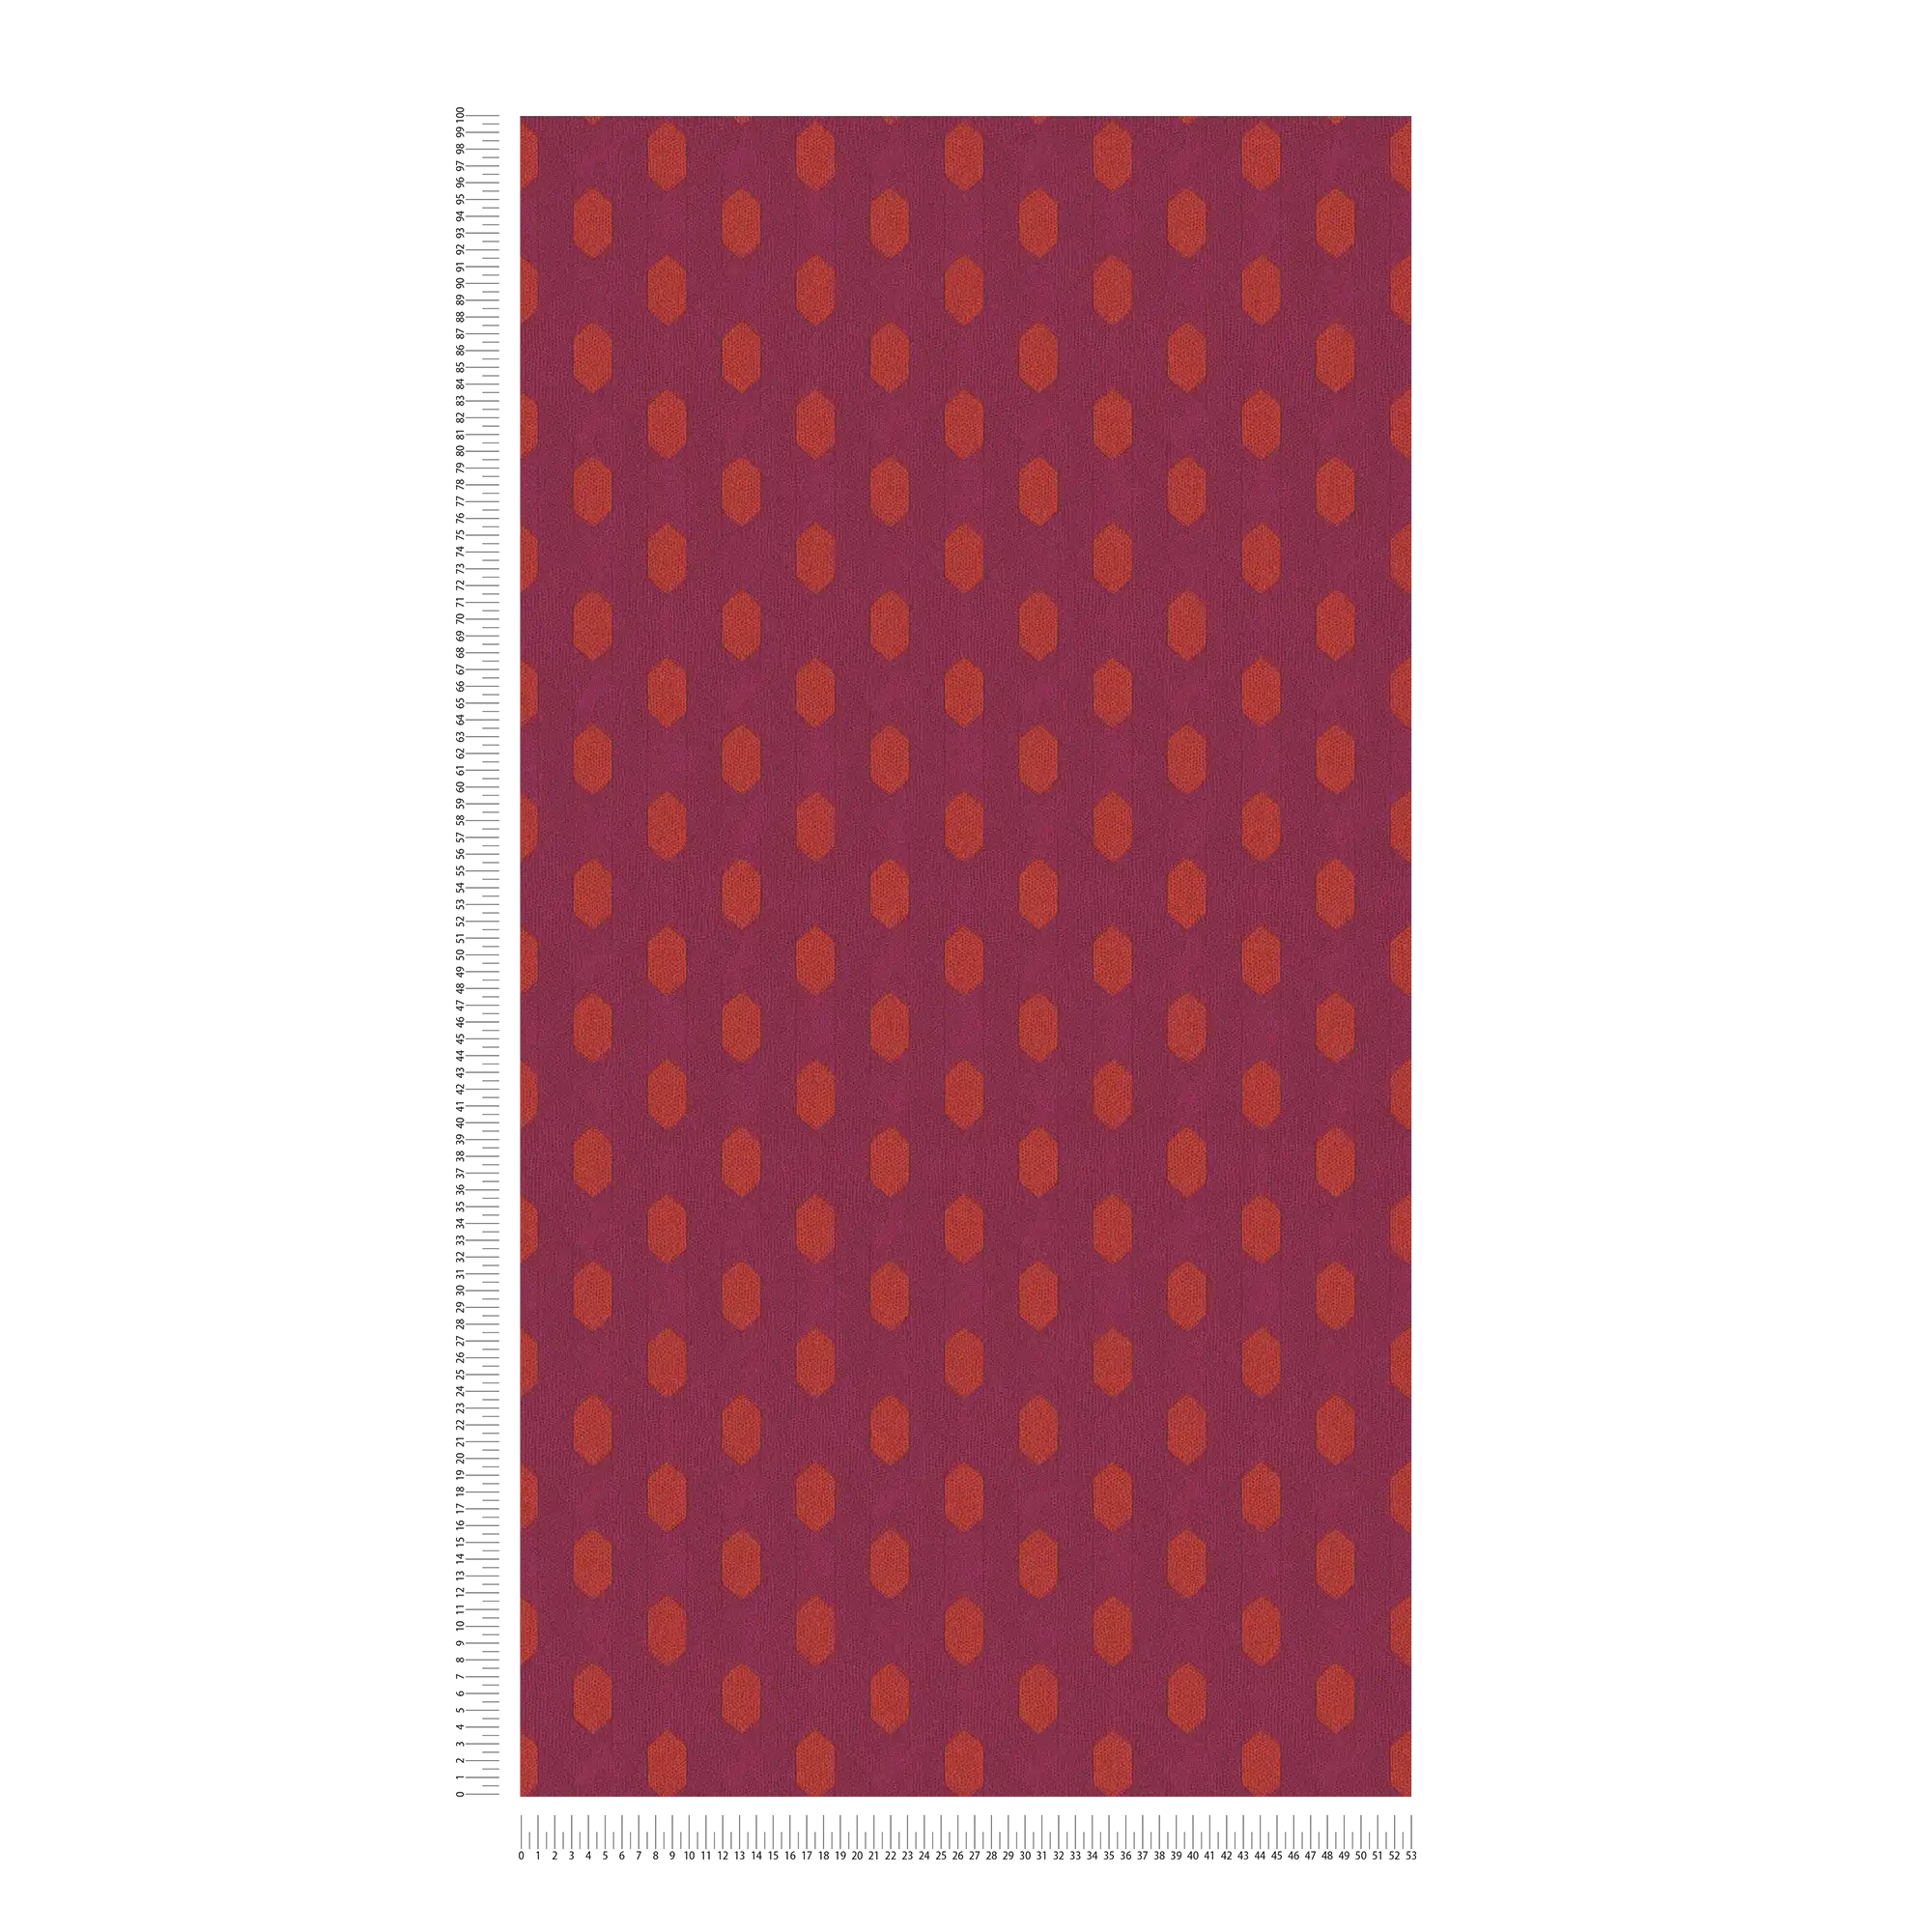             Magenta wallpaper with geometric pattern - purple, red, orange
        